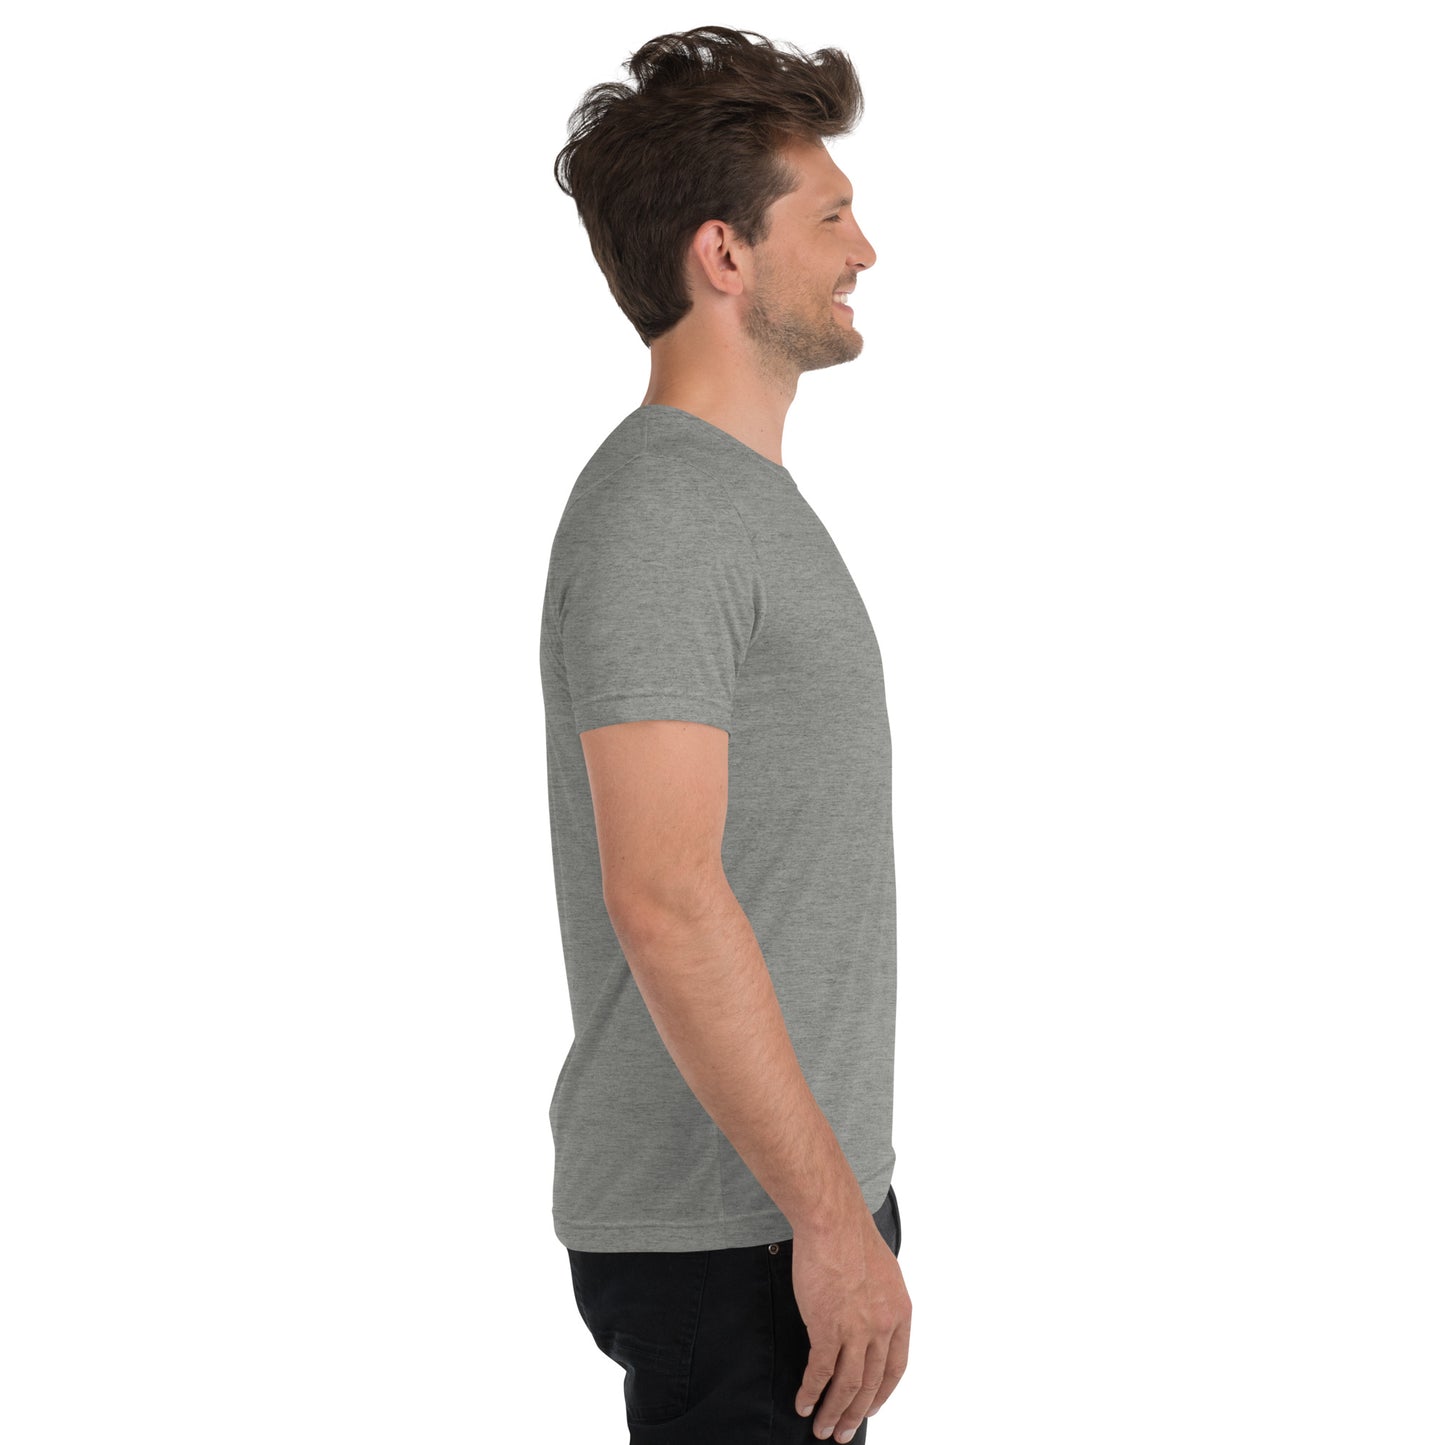 Villani Premium Short-Sleeved Shirt